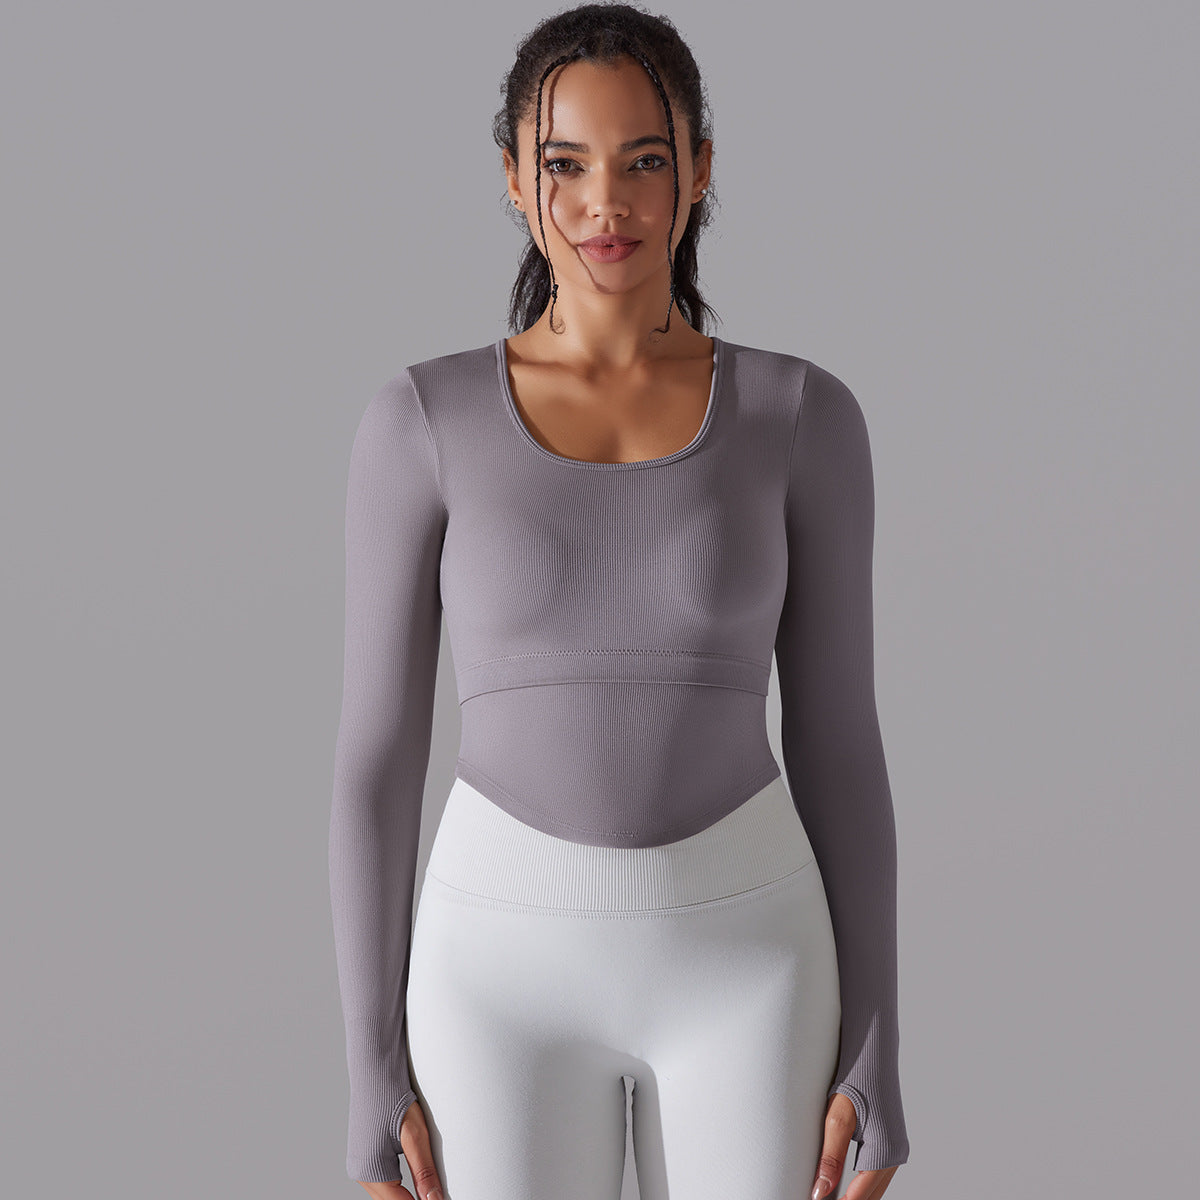 BamBam Seamless Knitting Solid Color Ribbed Sports Yoga Long-Sleeved Running Fitness Yoga Tops For Women - BamBam